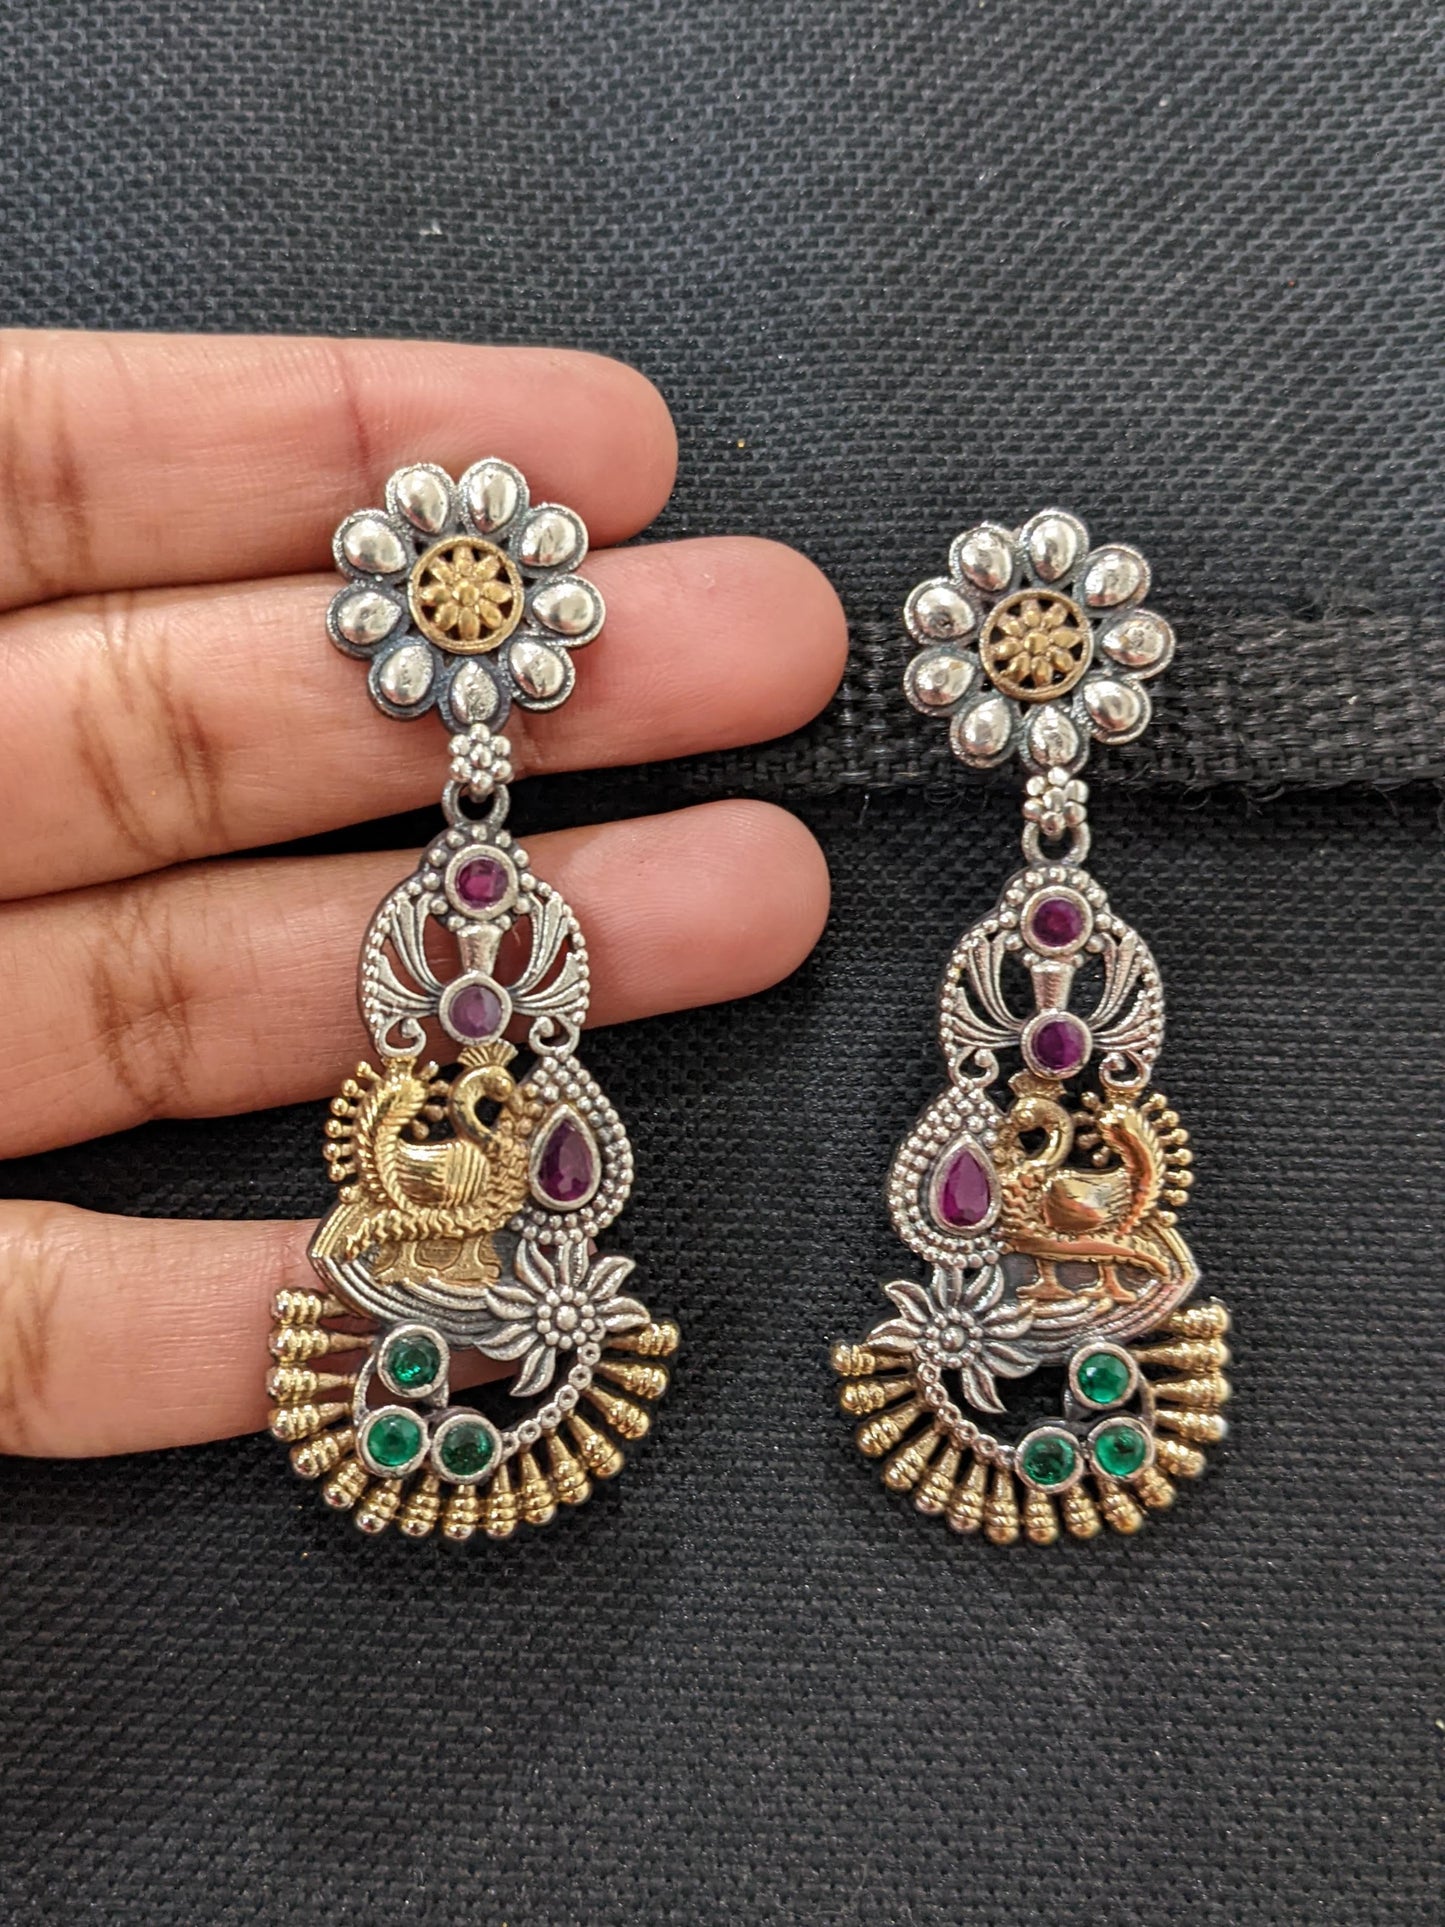 Dual Tone German Silver Peacock Earrings